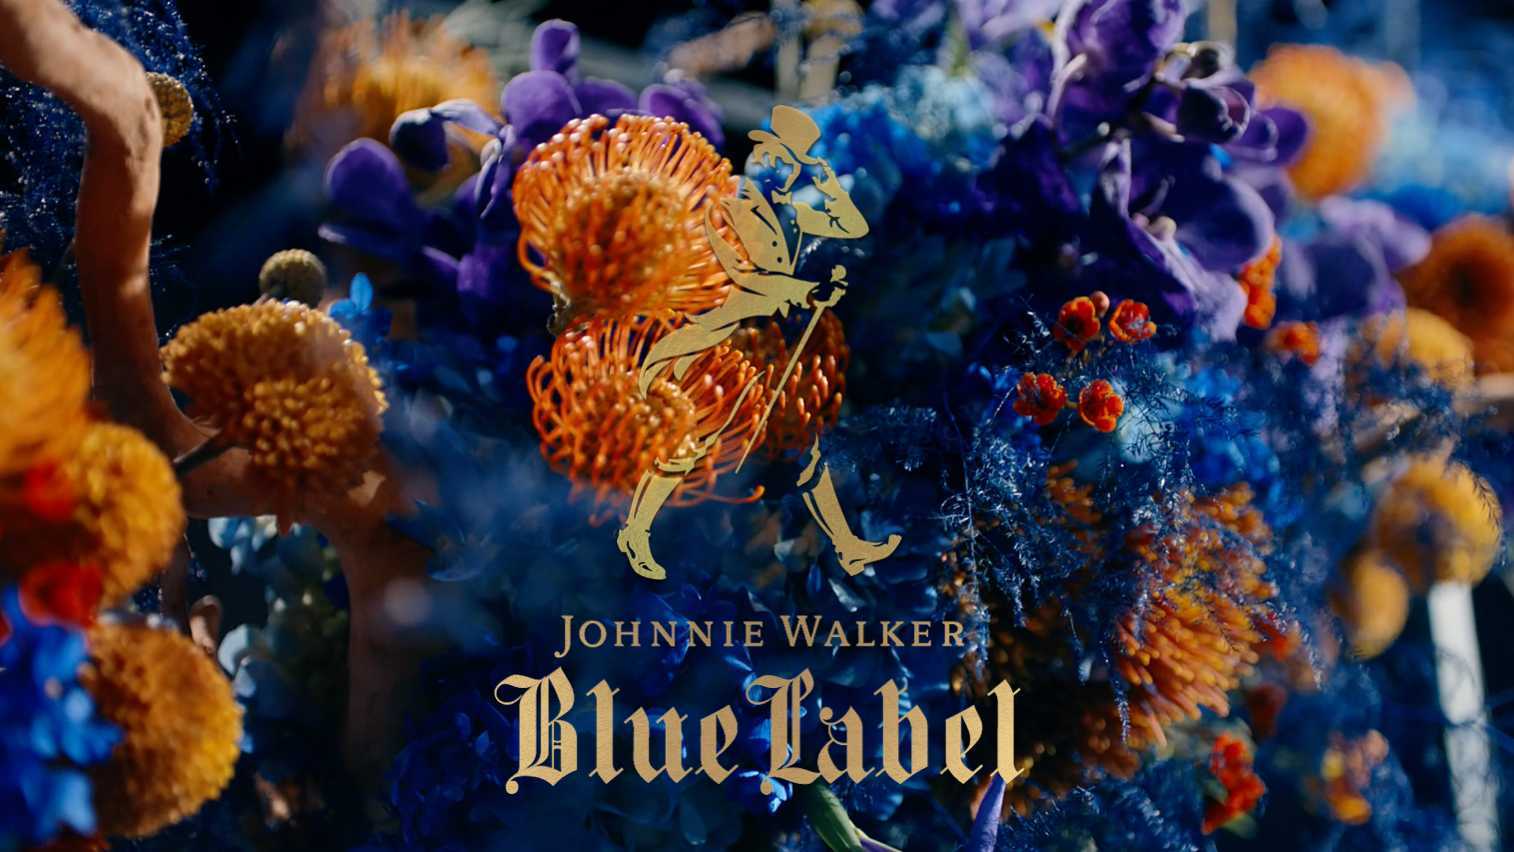 Johnnie Walker Blue Label - Blue Table